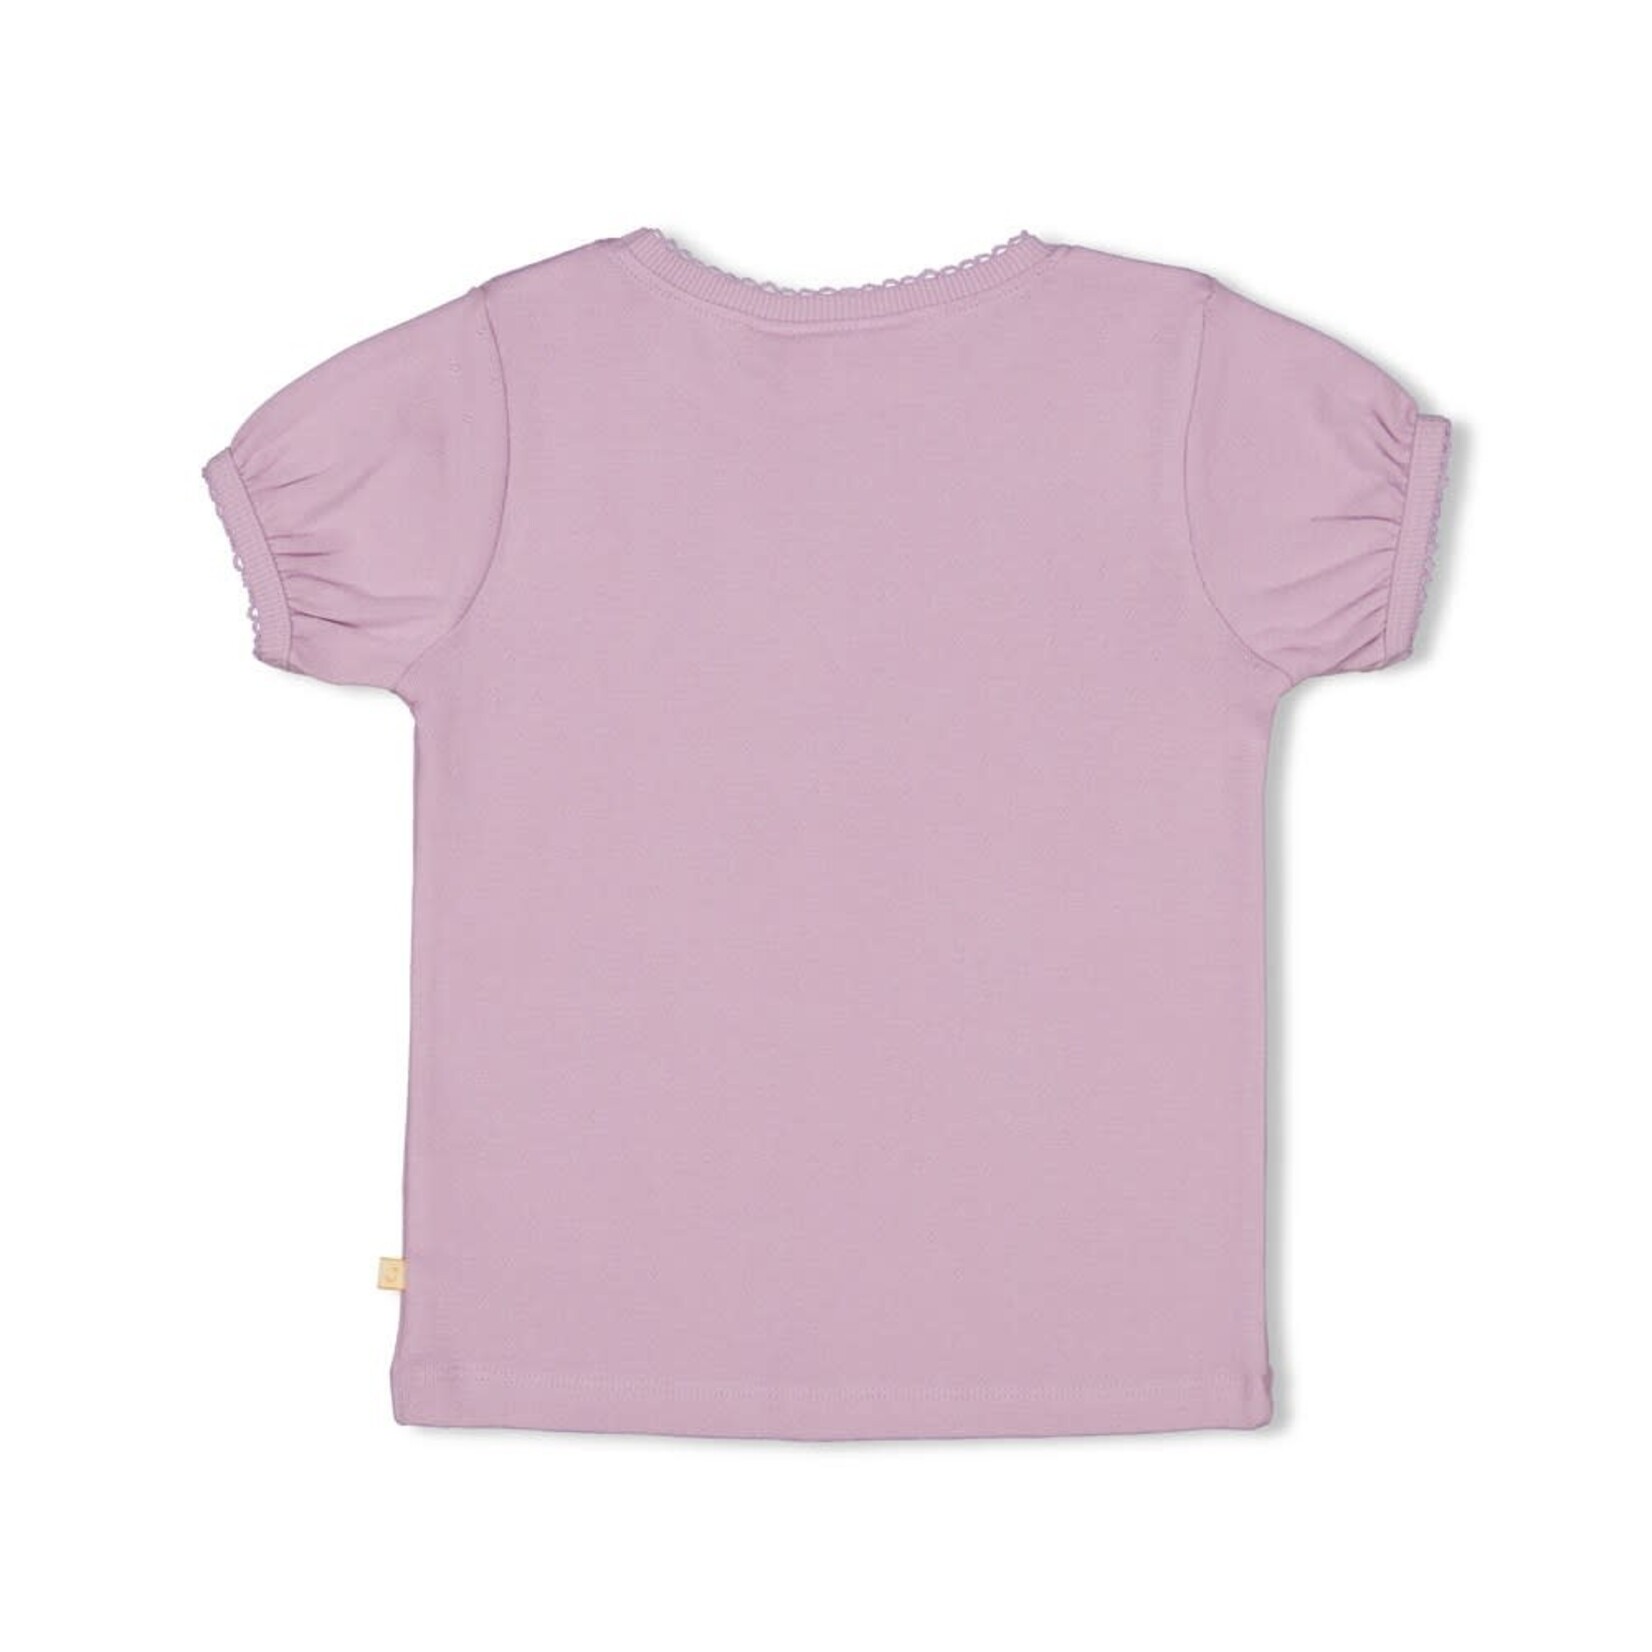 Jubel T-shirt - Sunny Side Up lila